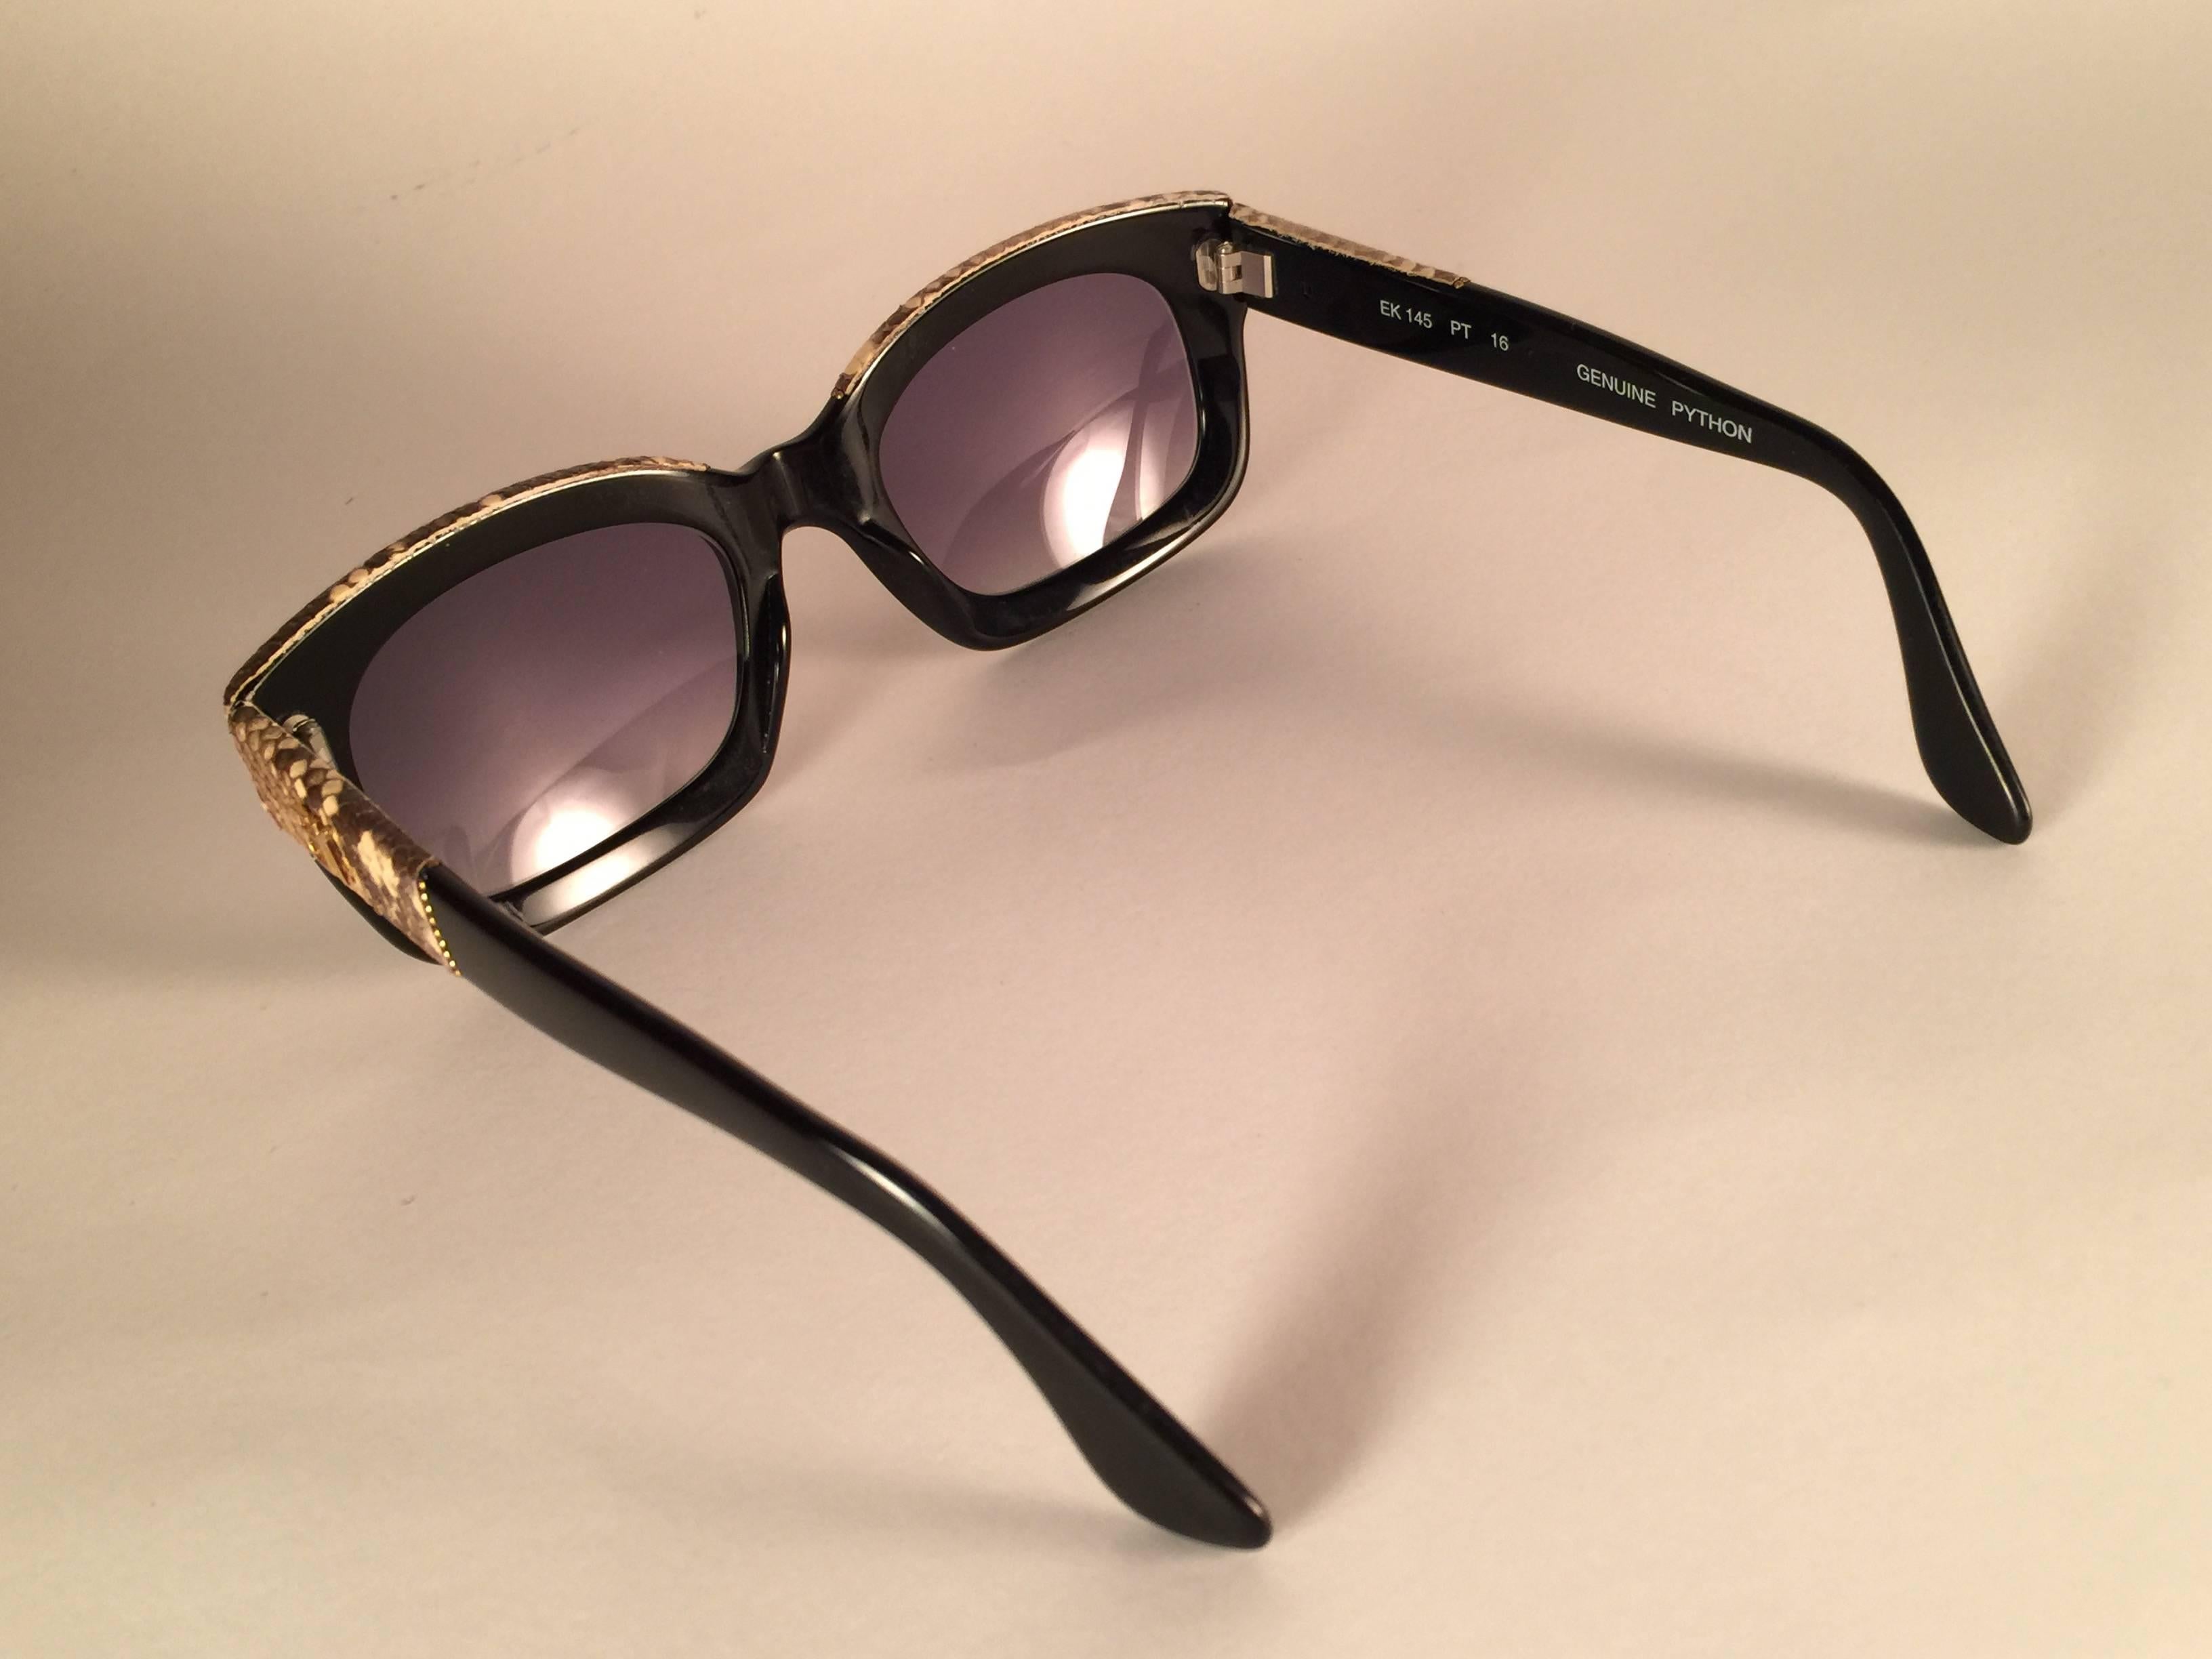 New Vintage Emanuelle Kahn Paris Genuine Python & Black Sunglasses France 2